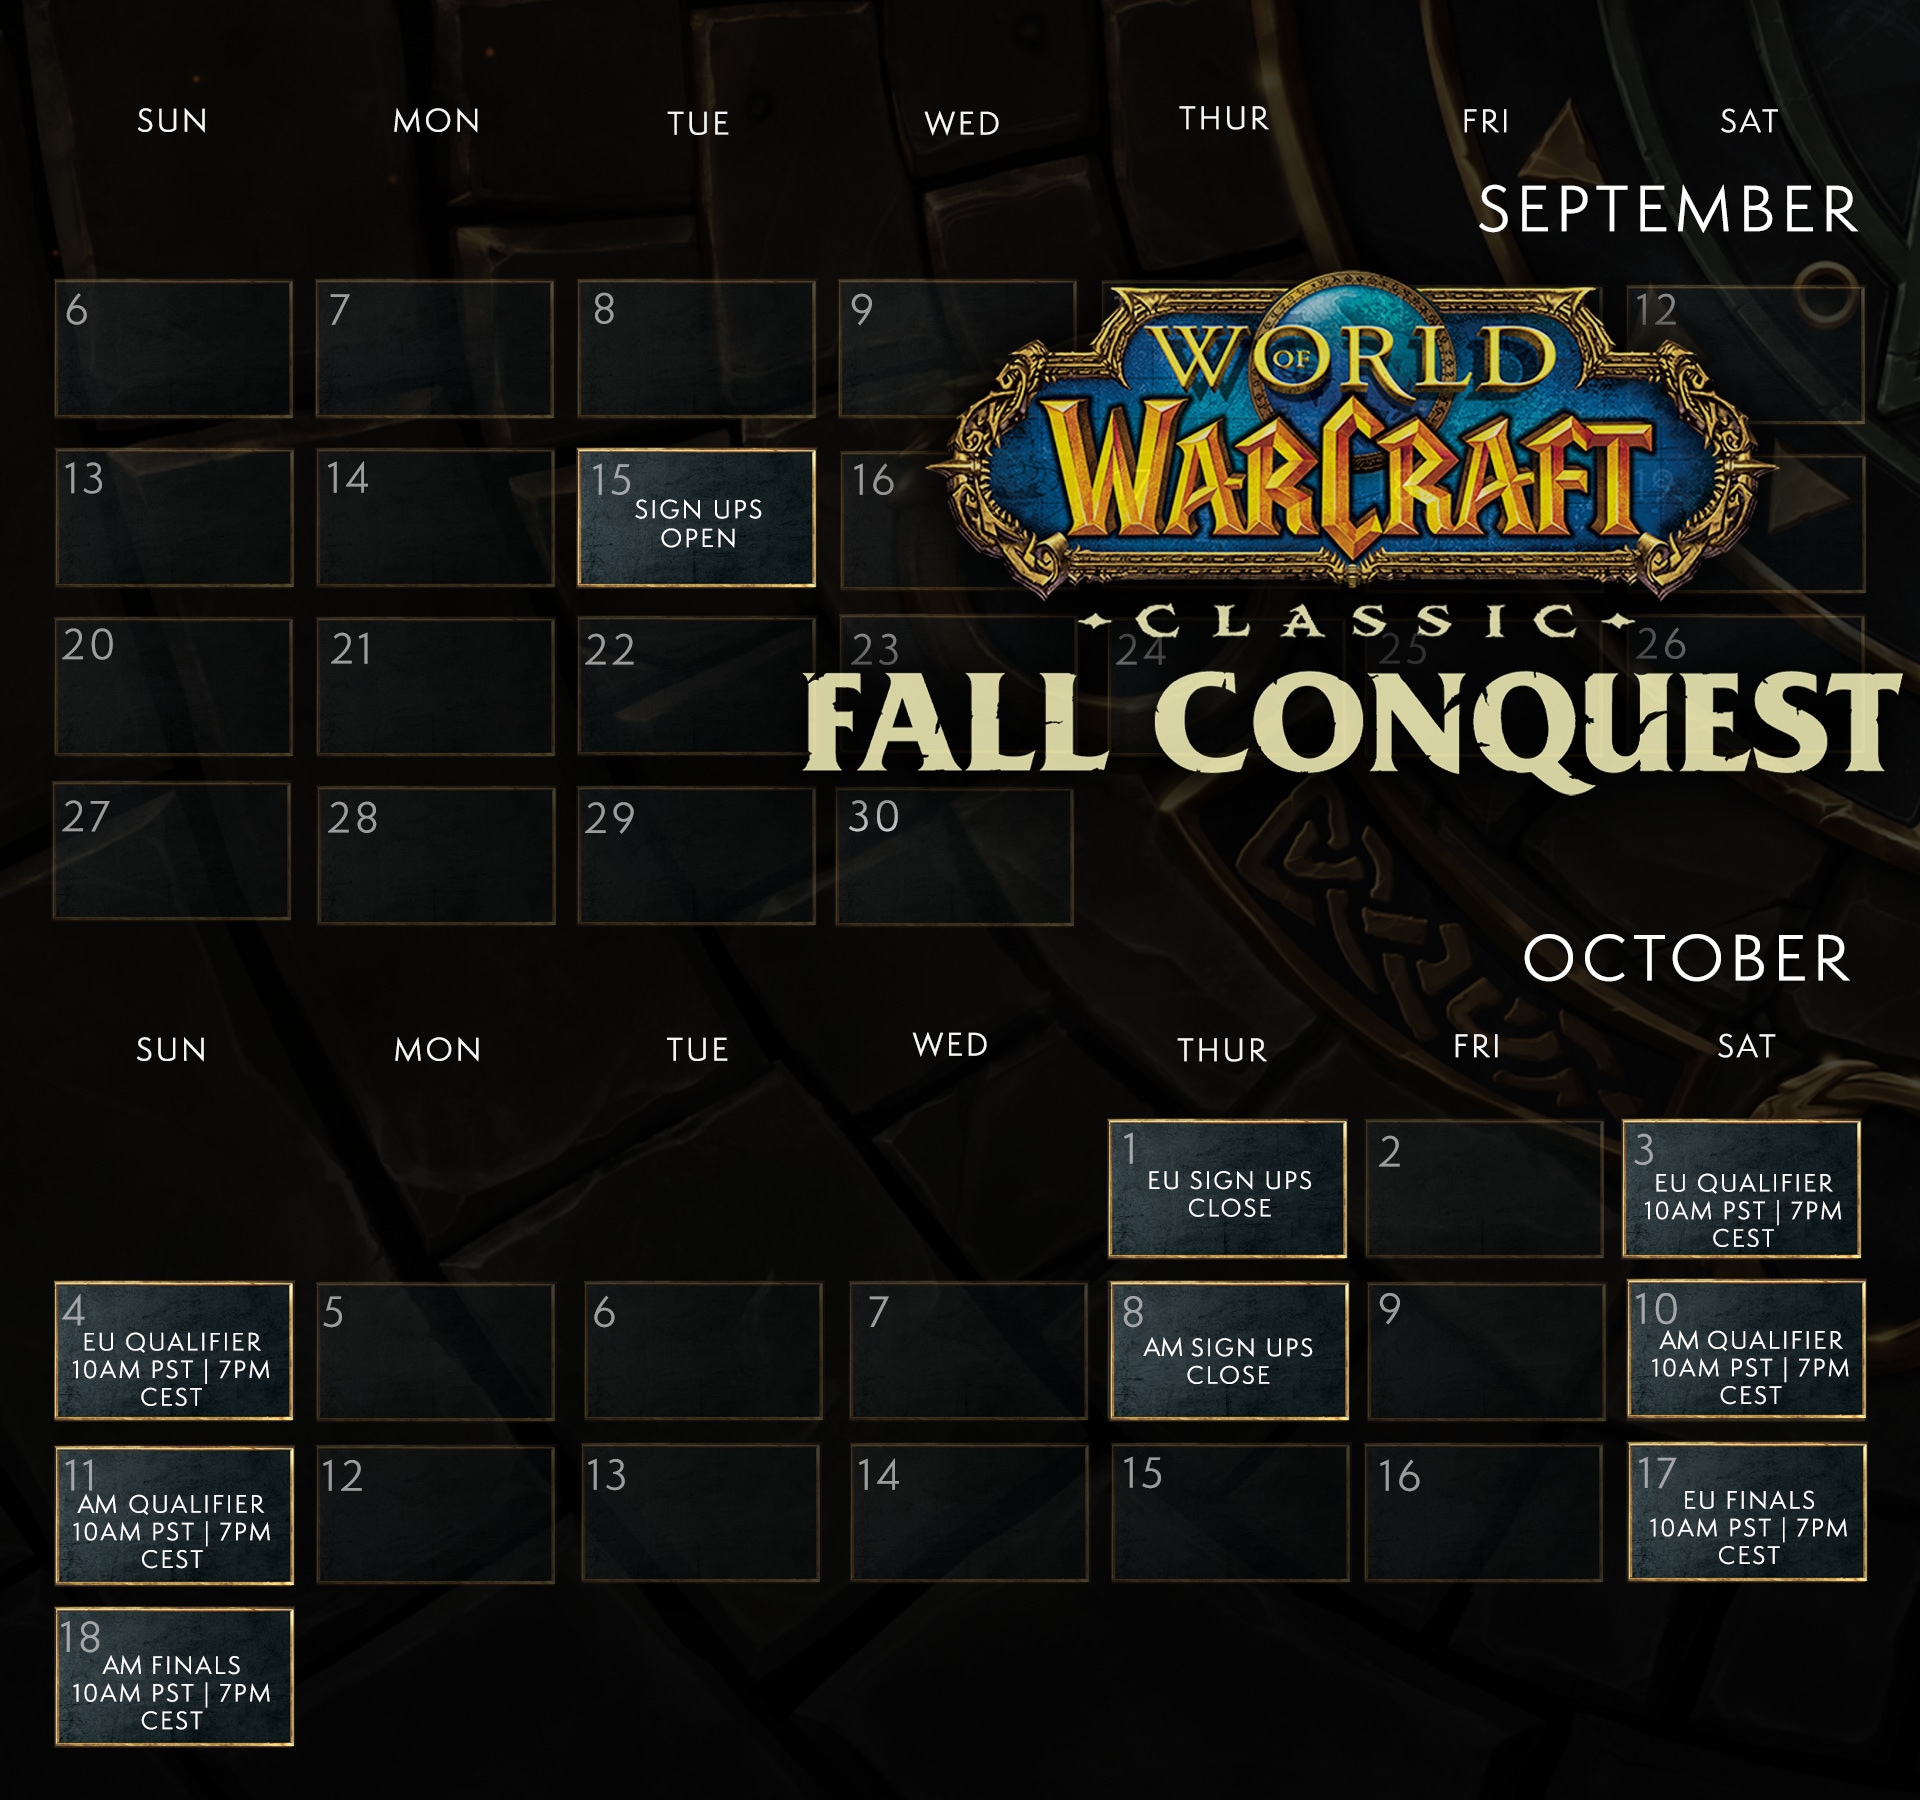 Conquest Schedule.png